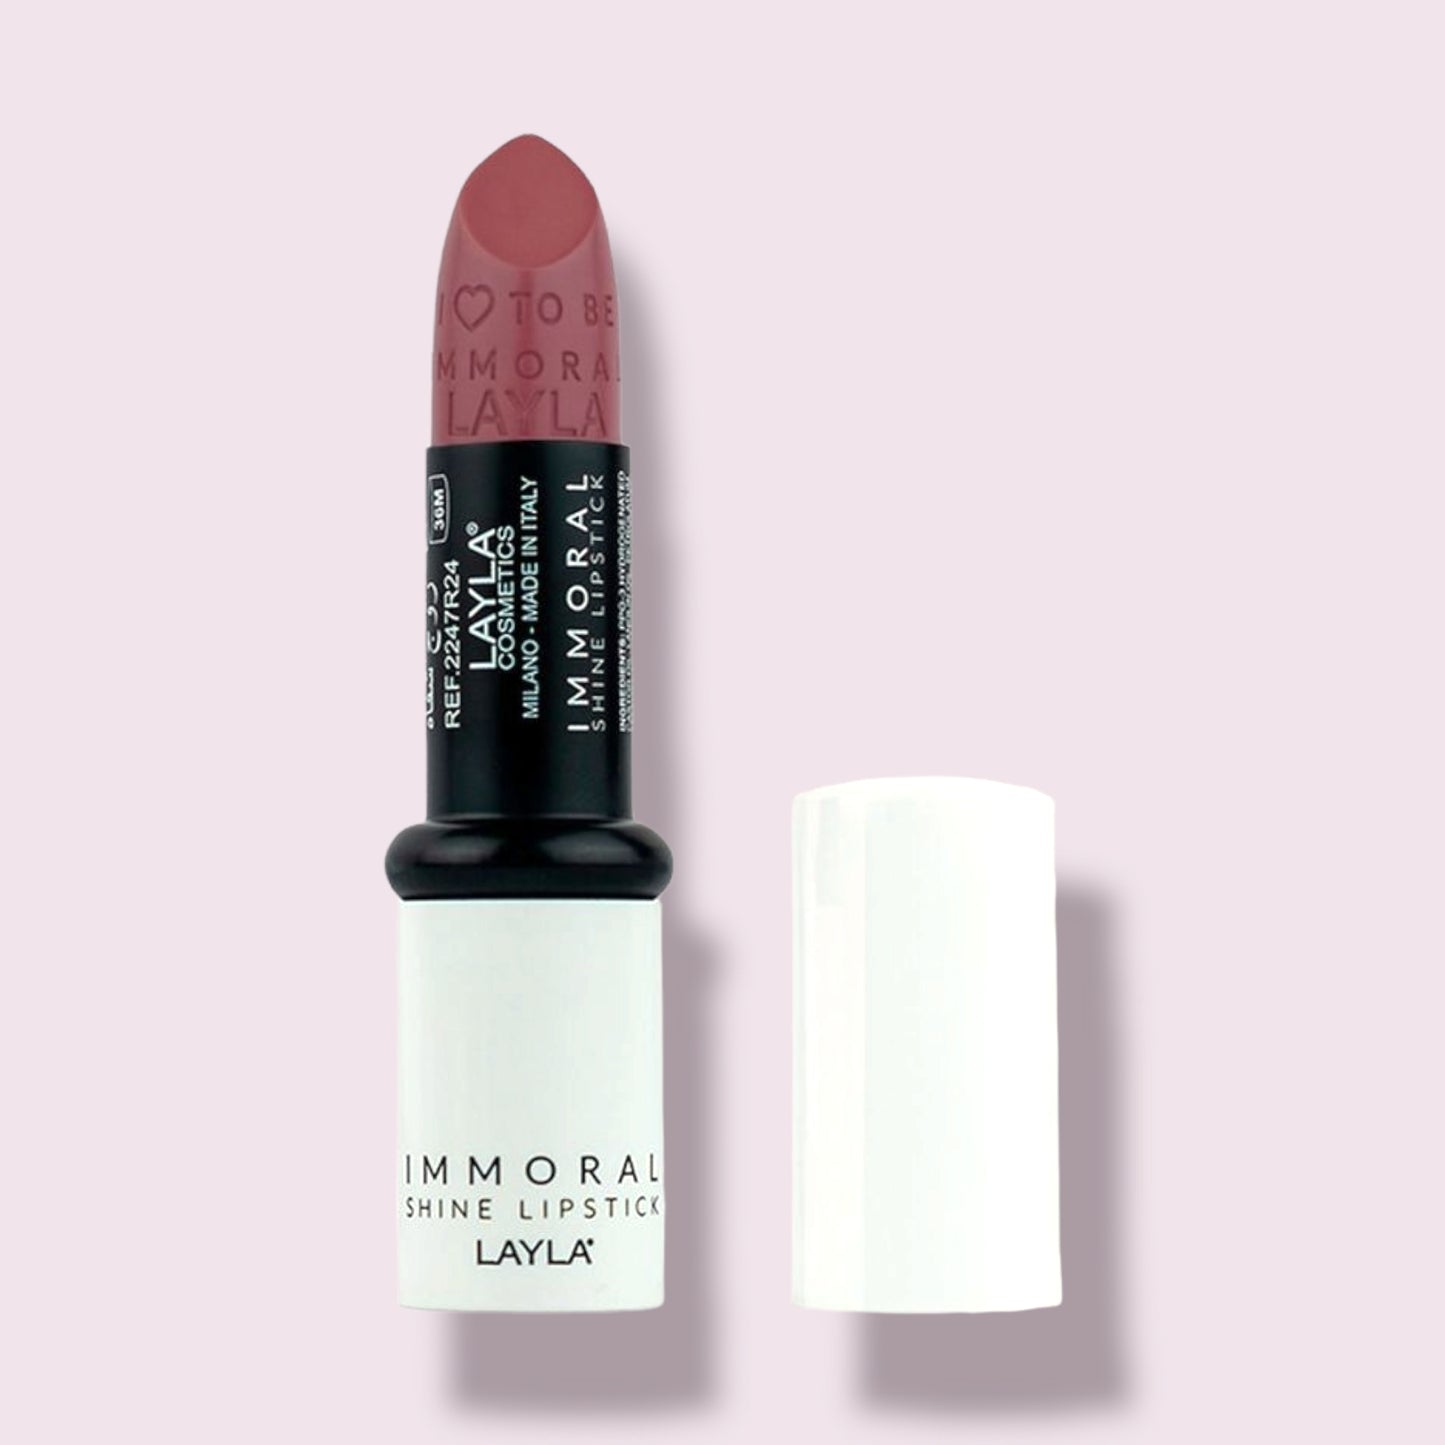 Immoral Shine Lipstick 08